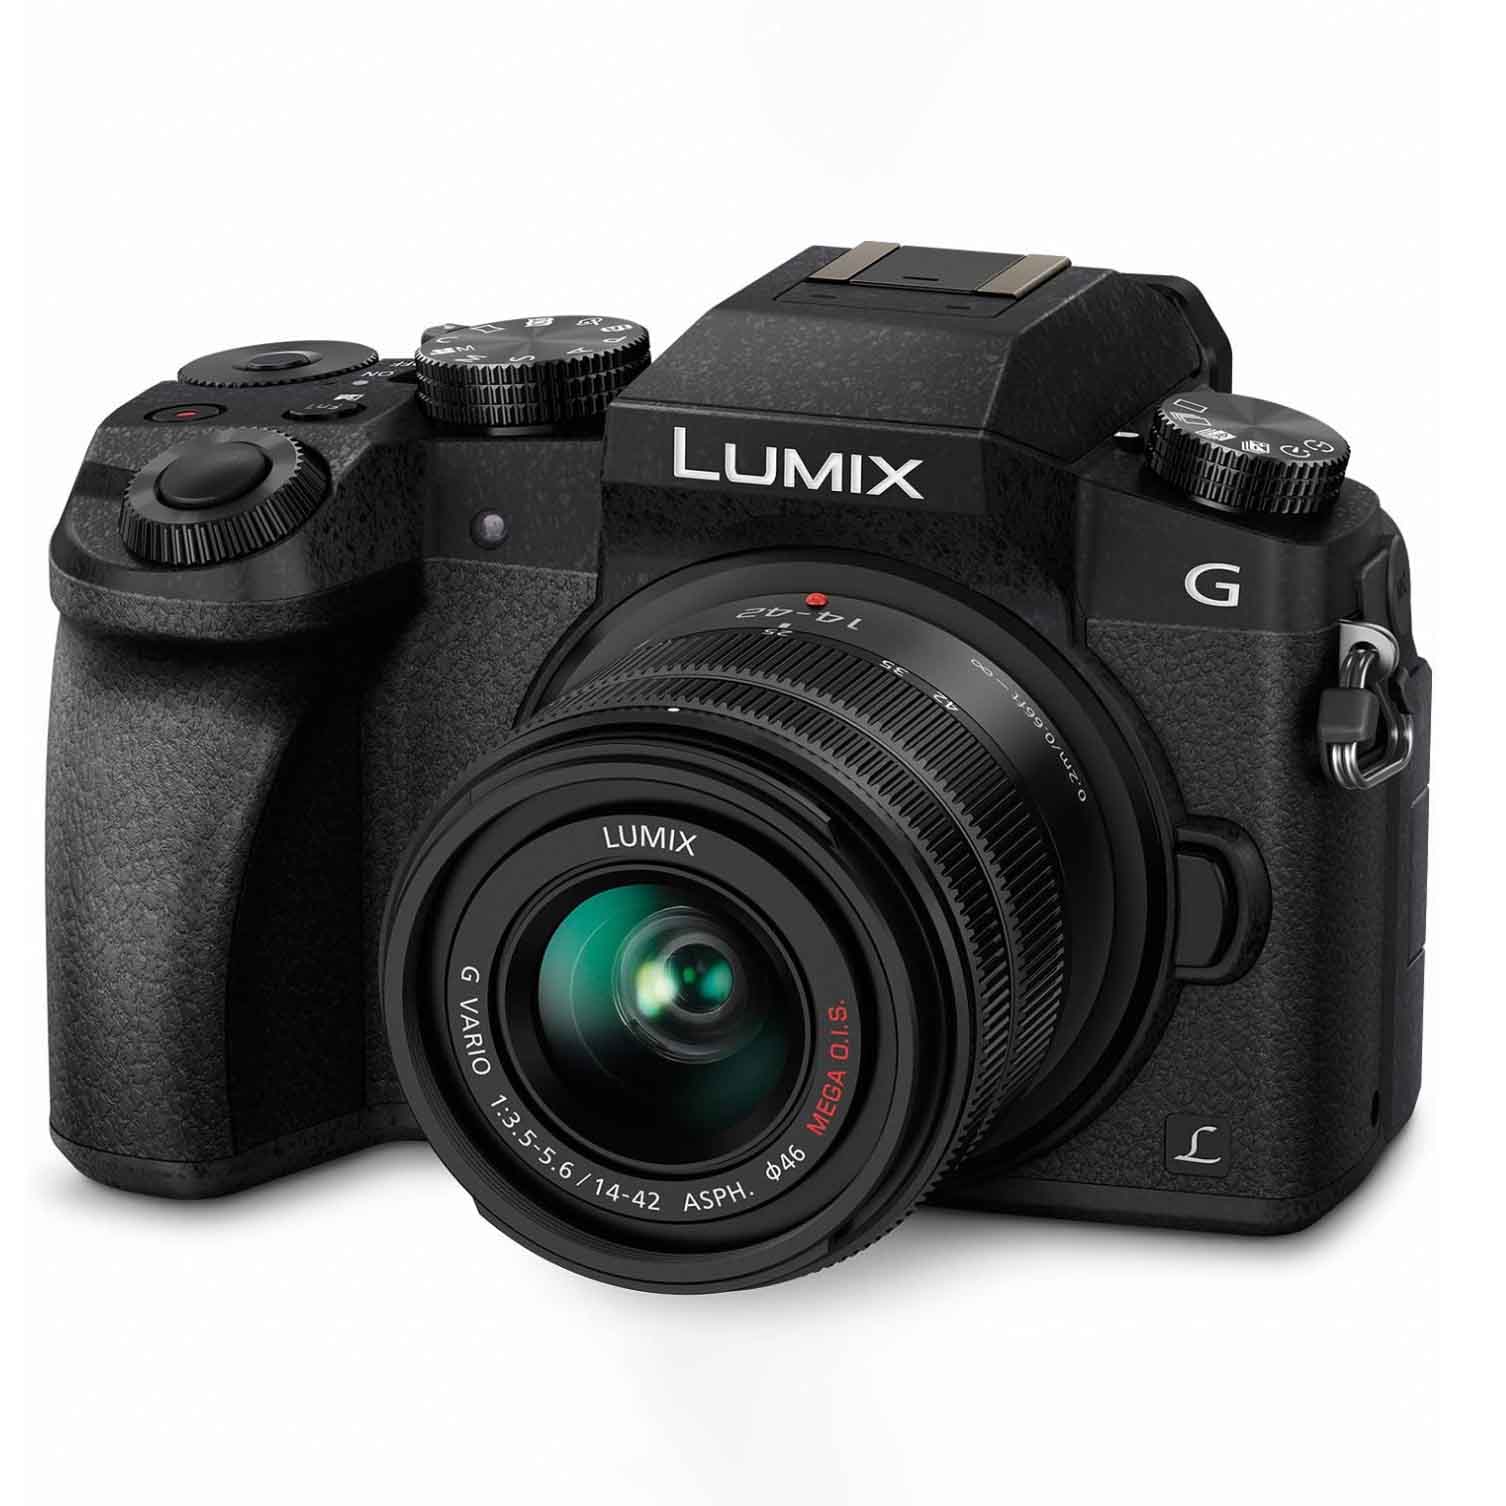 Black Lumis DSLR camera front view